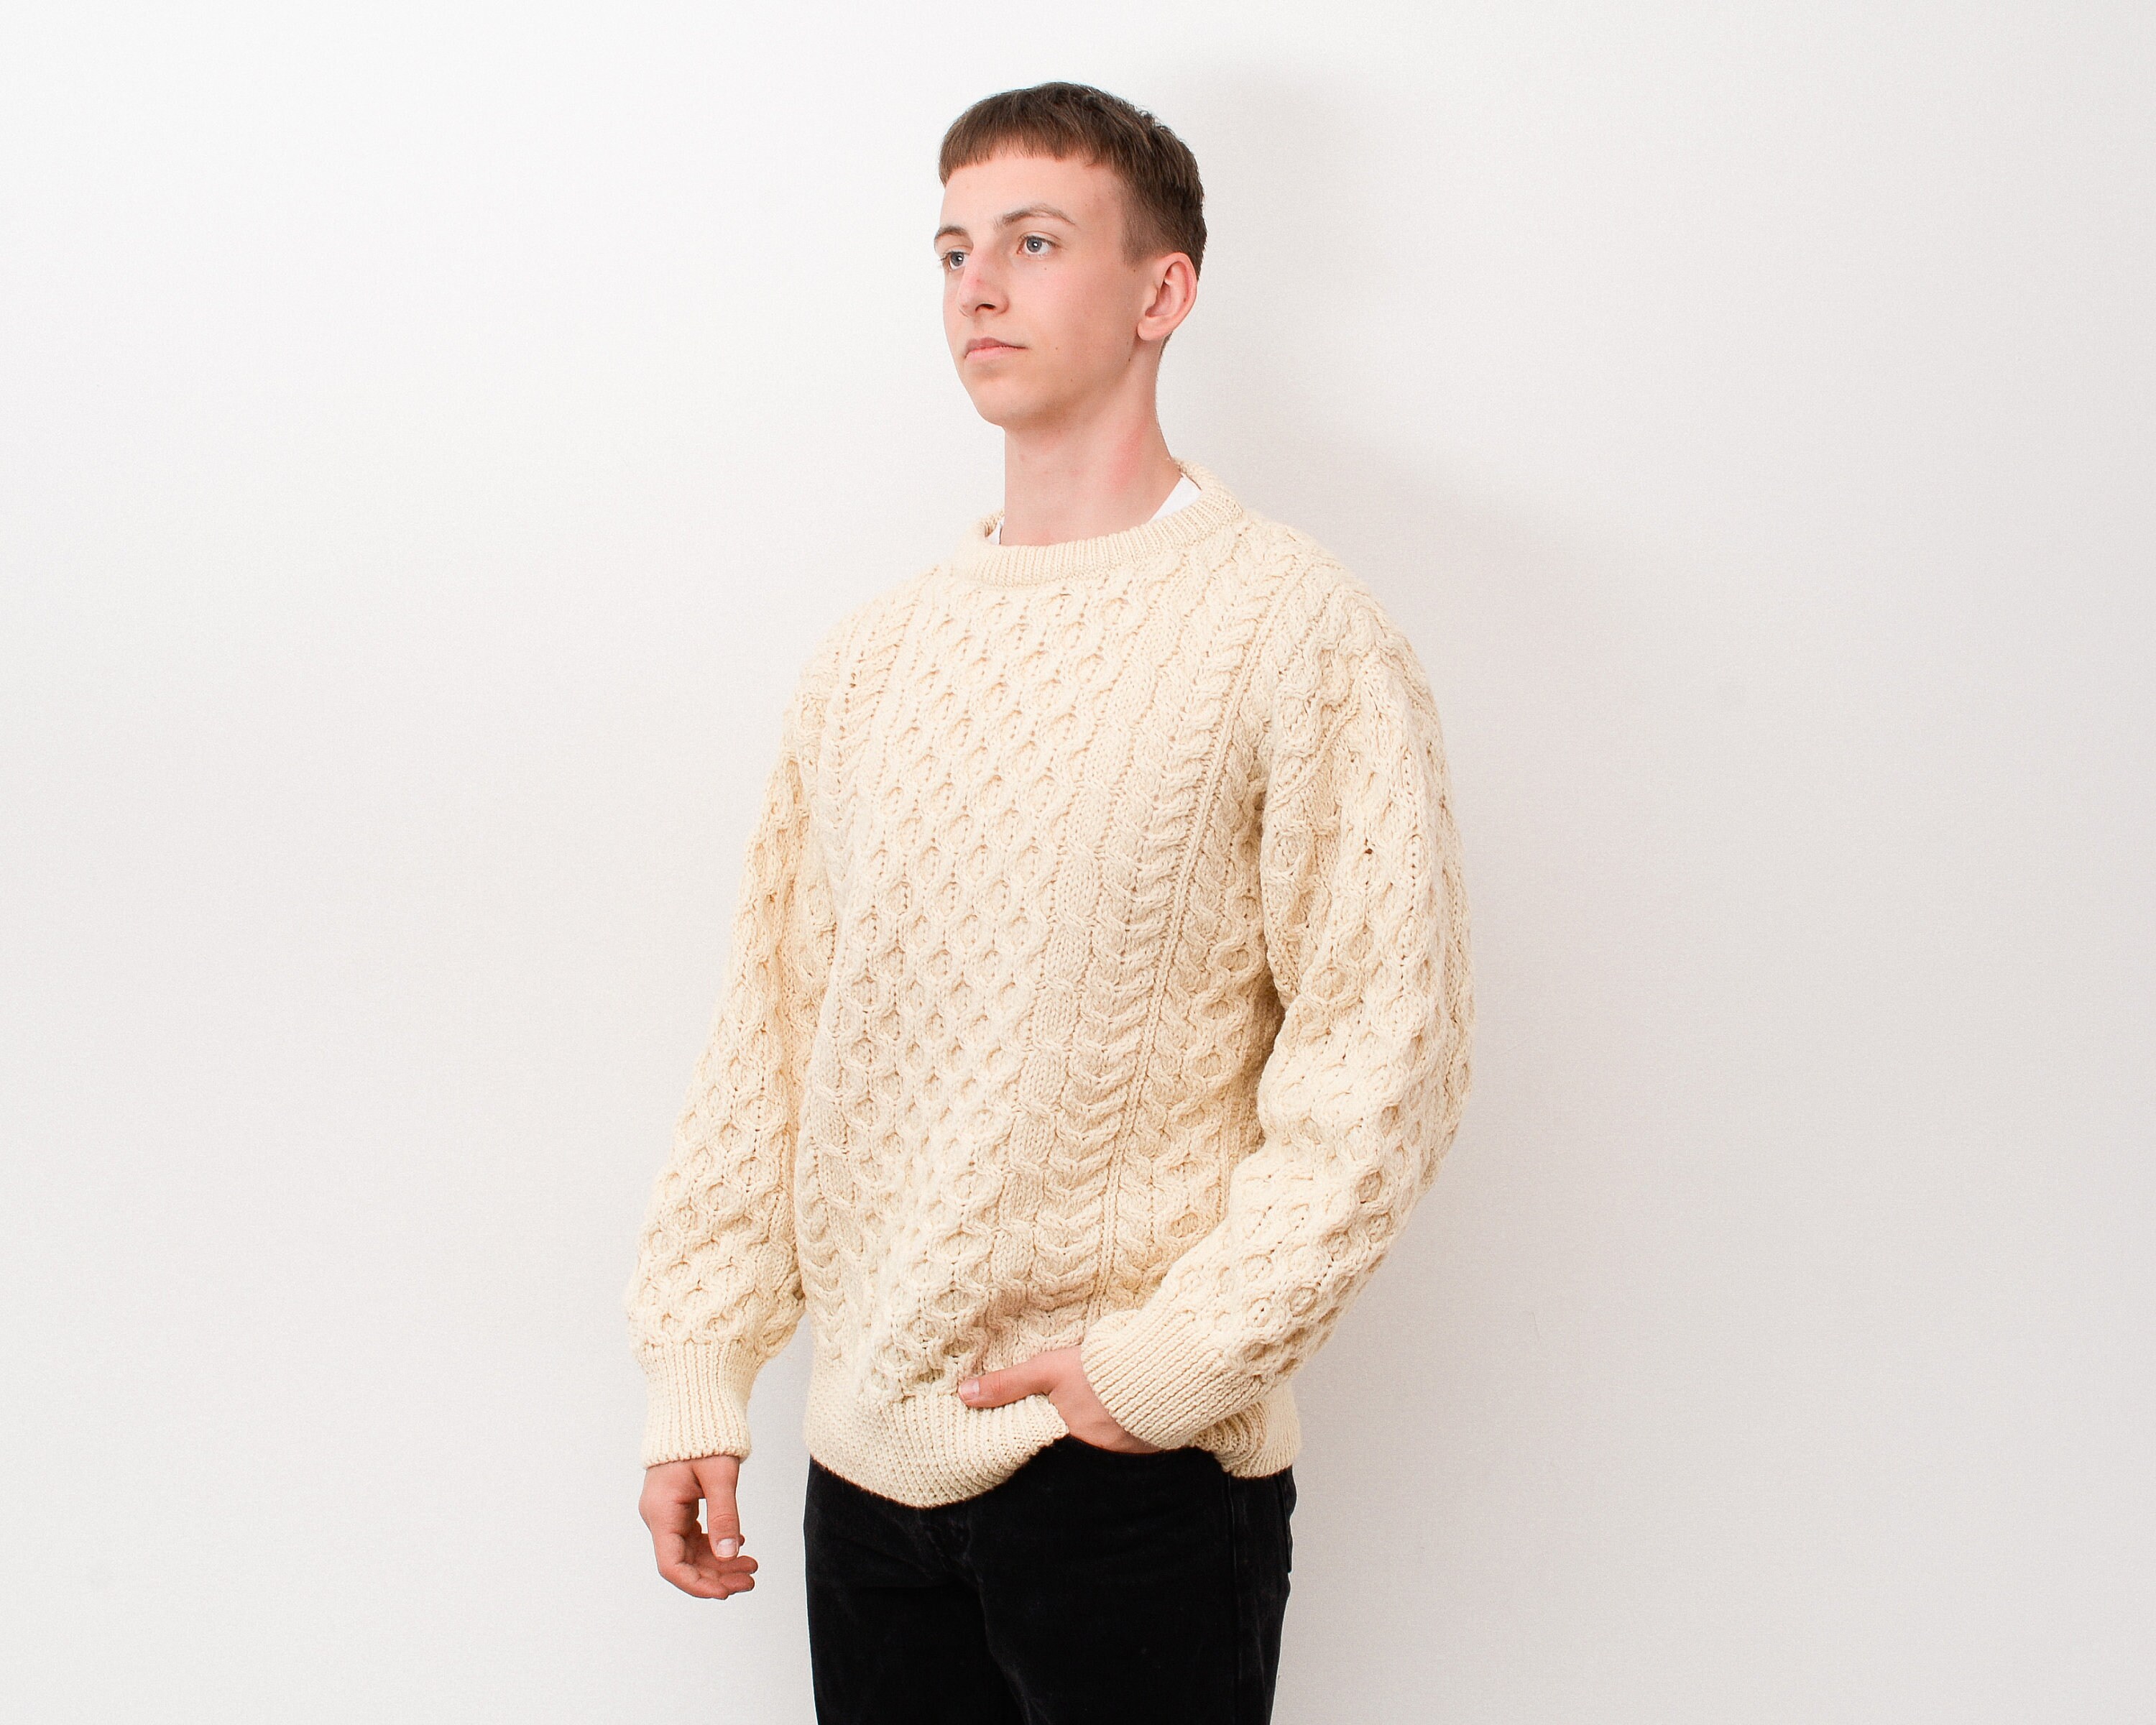 CLAOUKNIT Sweater Market made in Ireland 100% Wool Men's M | Etsy